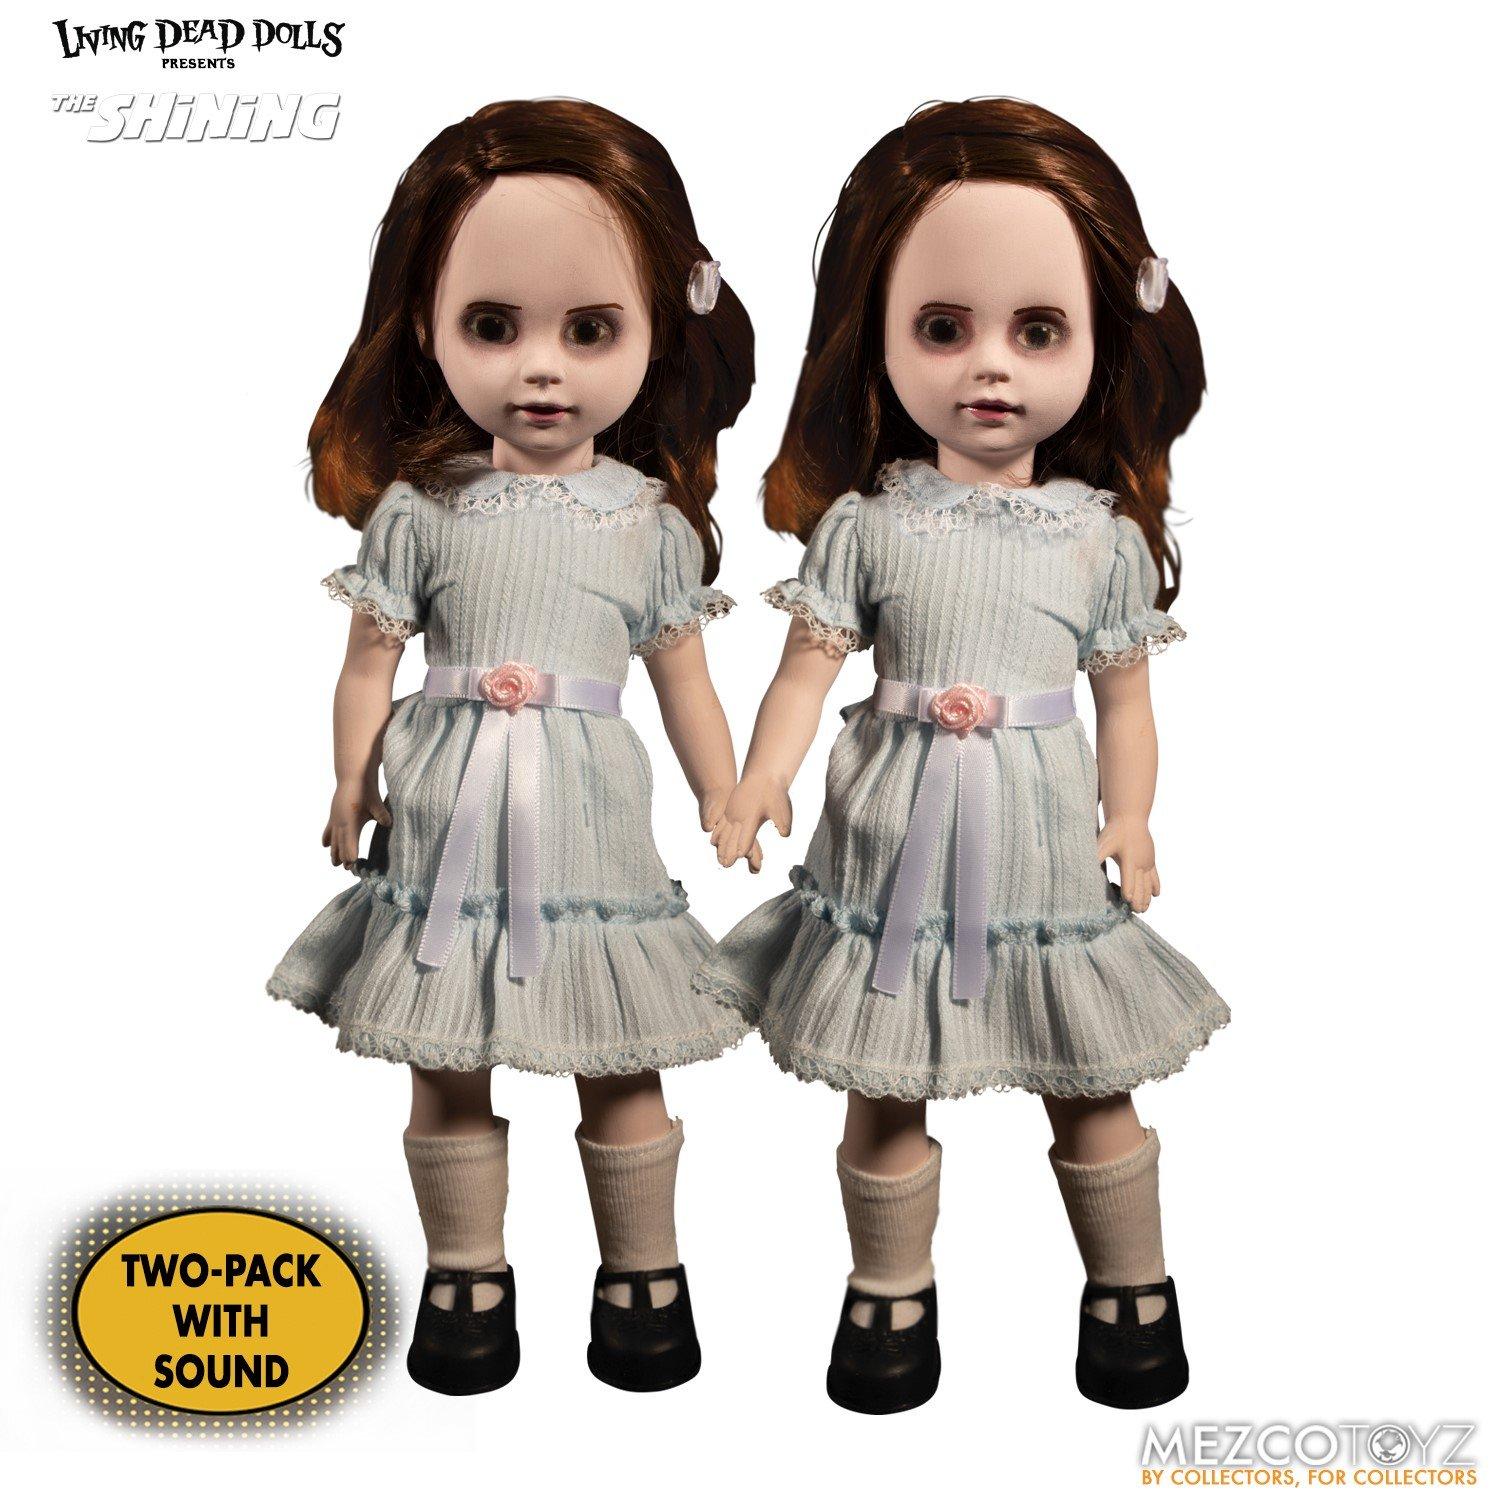 buy living dead dolls